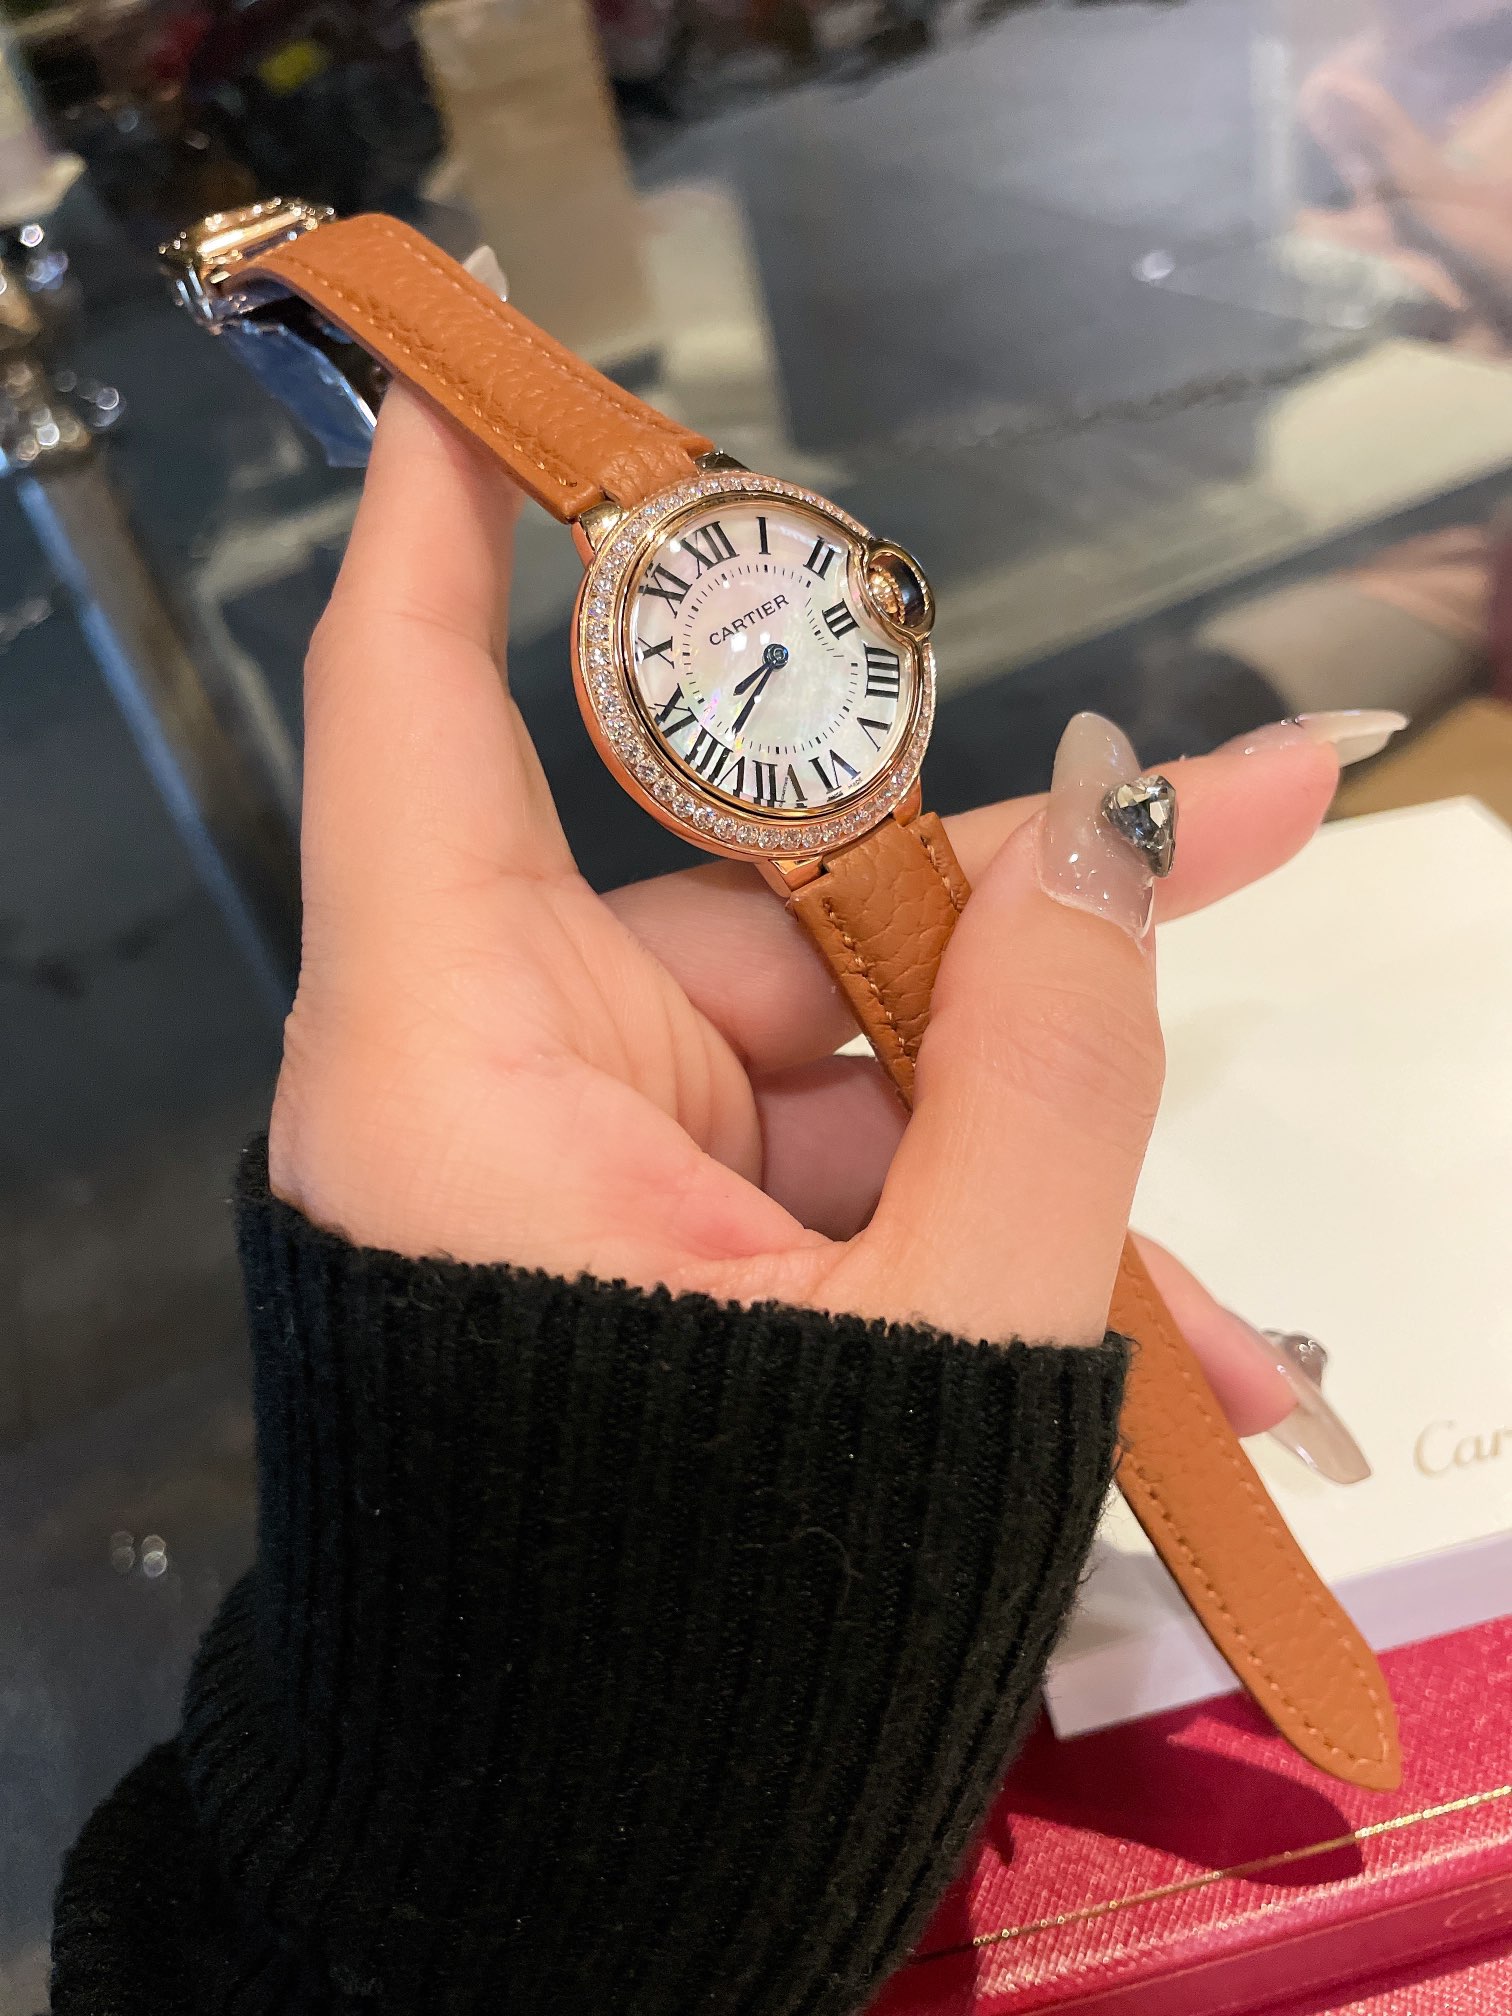 CARTIERカルティエ 腕時計 並行輸入コピー フランス 薄い腕時計 レザー 水晶ダイヤモンド 新商品 限定品 ブラウン_6